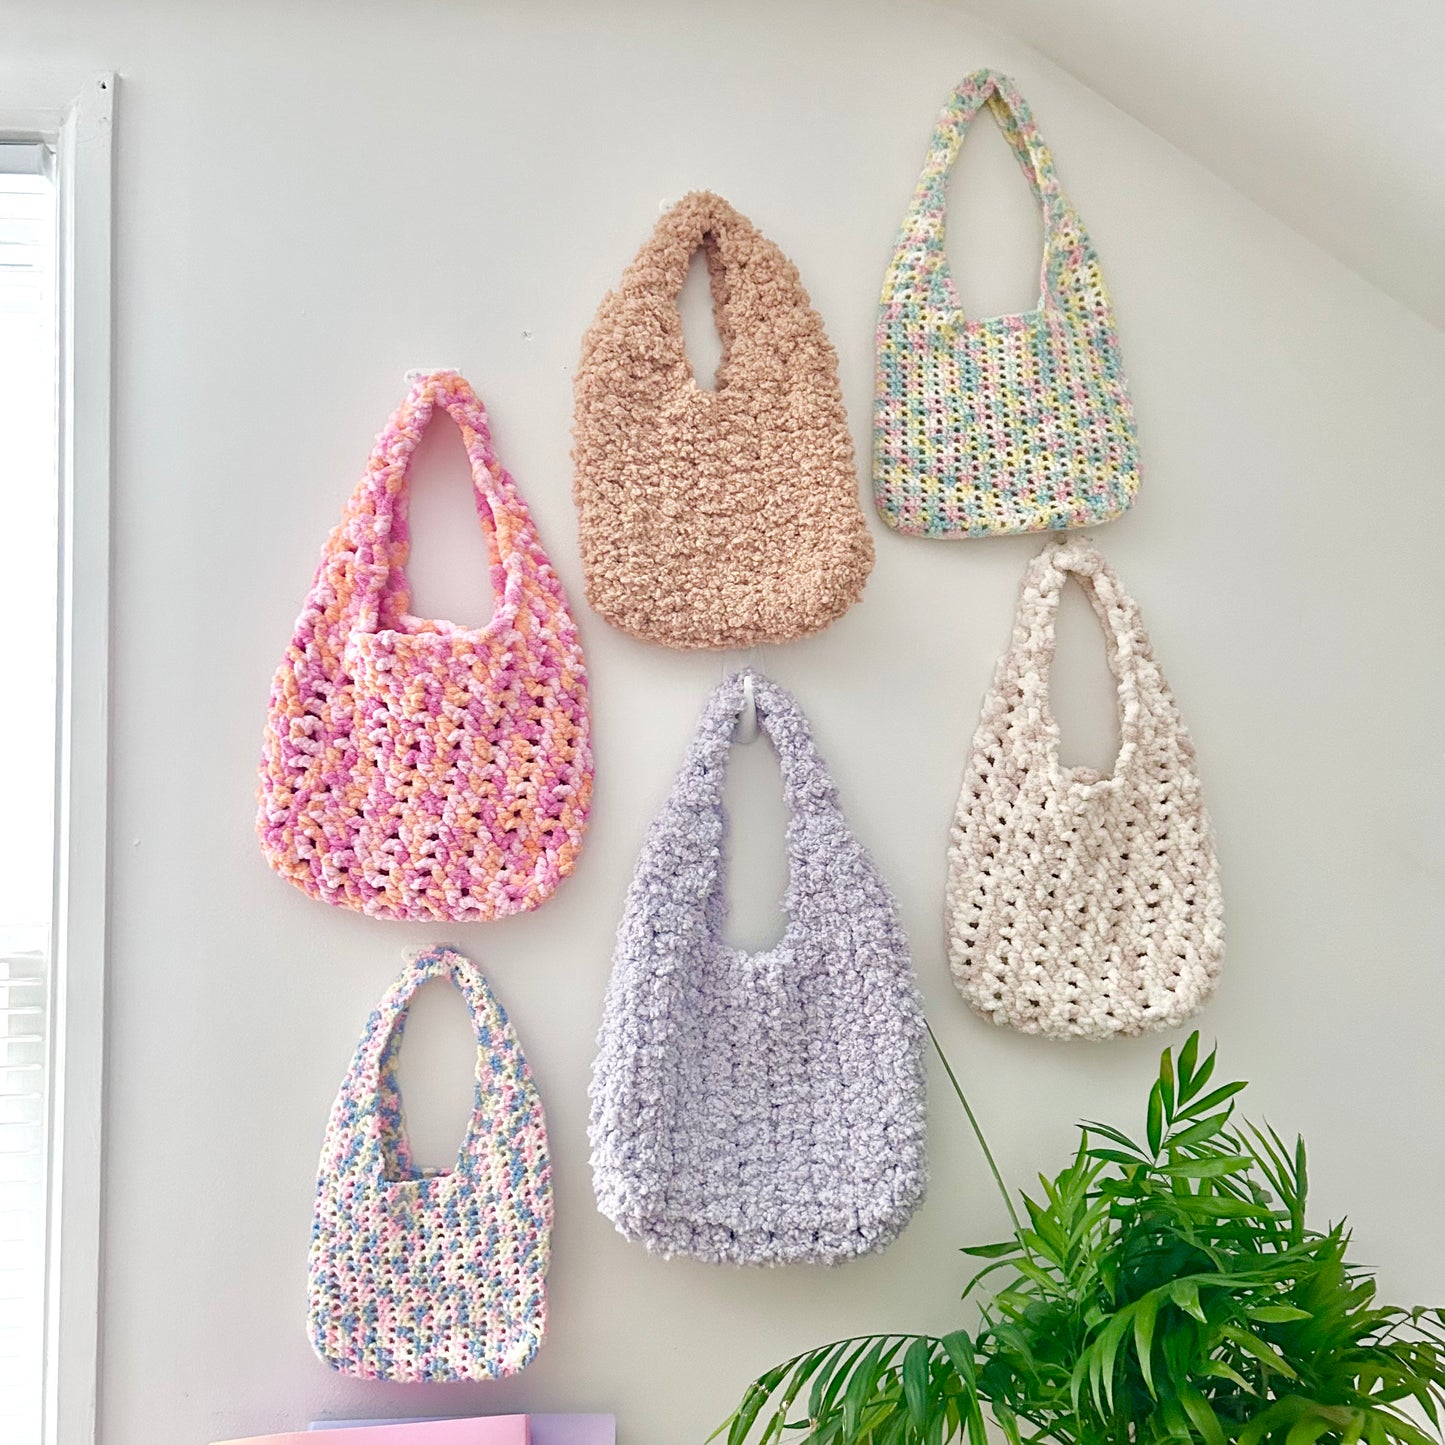 Orange + Pink Crochet Tote Bag